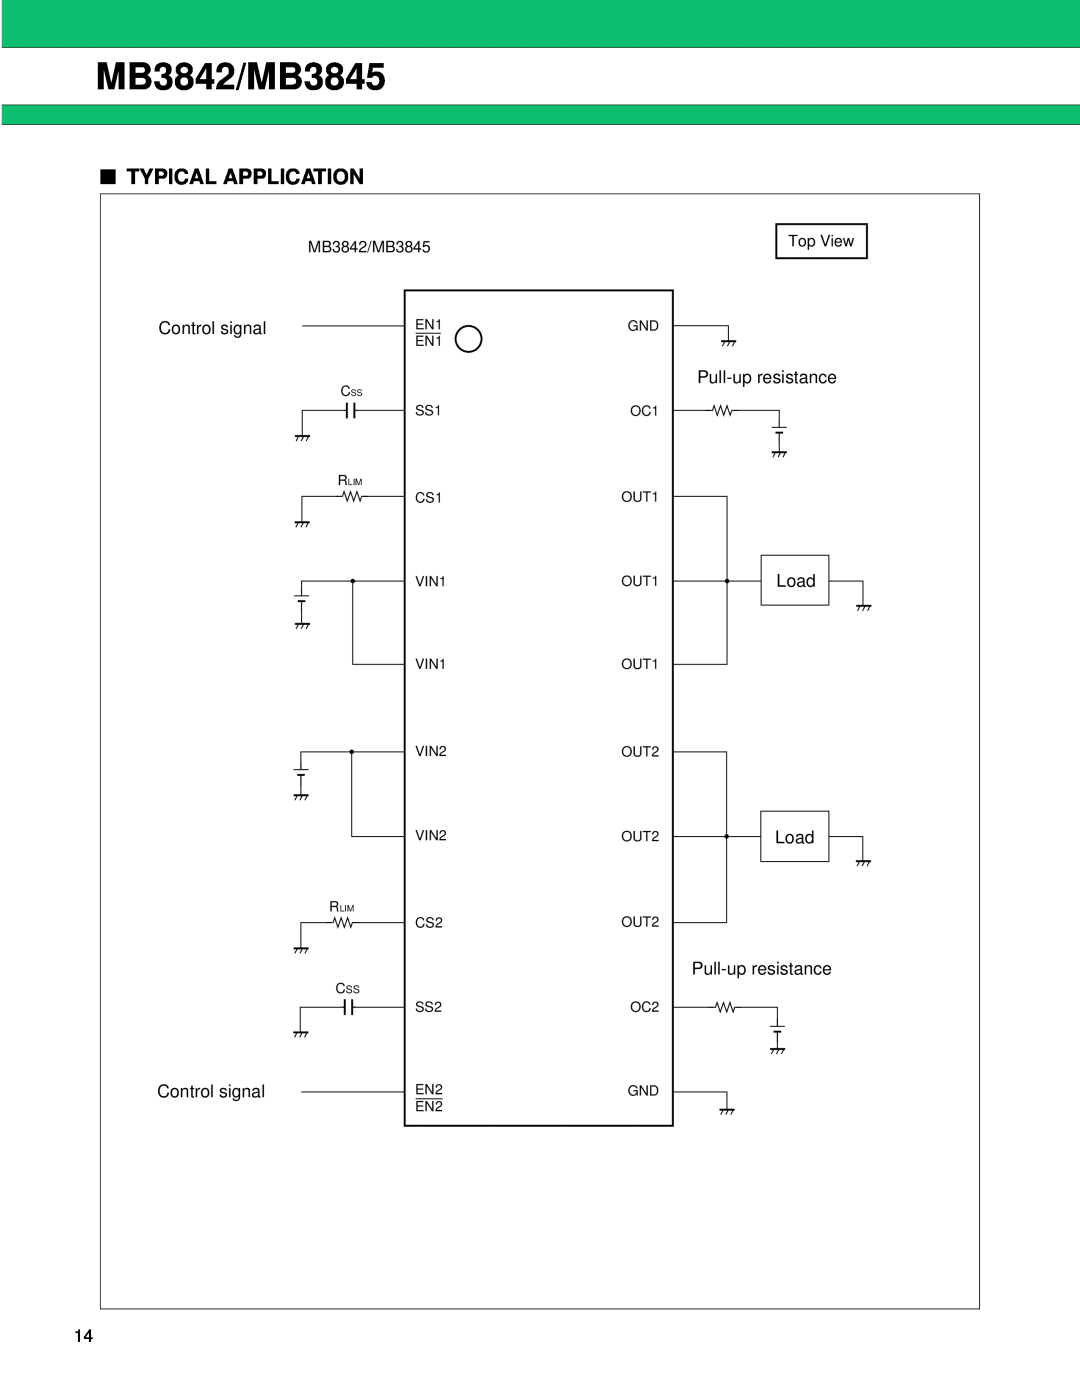 Fujitsu manual Typical Application, MB3842/MB3845, Top View 